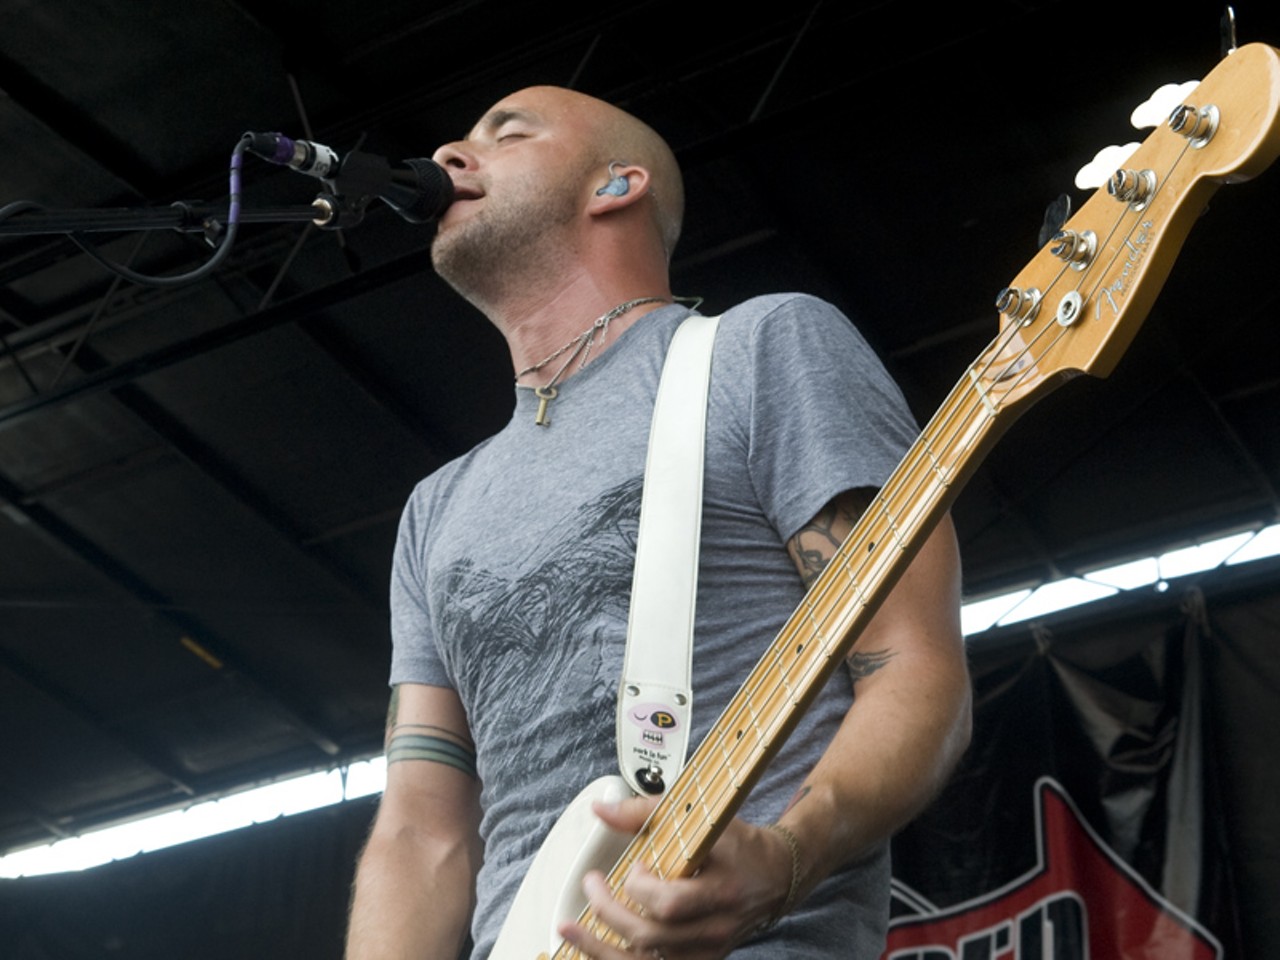 Dan Andriano of Alkaline Trio performing at the 2010 Vans Warped Tour in St. Louis.